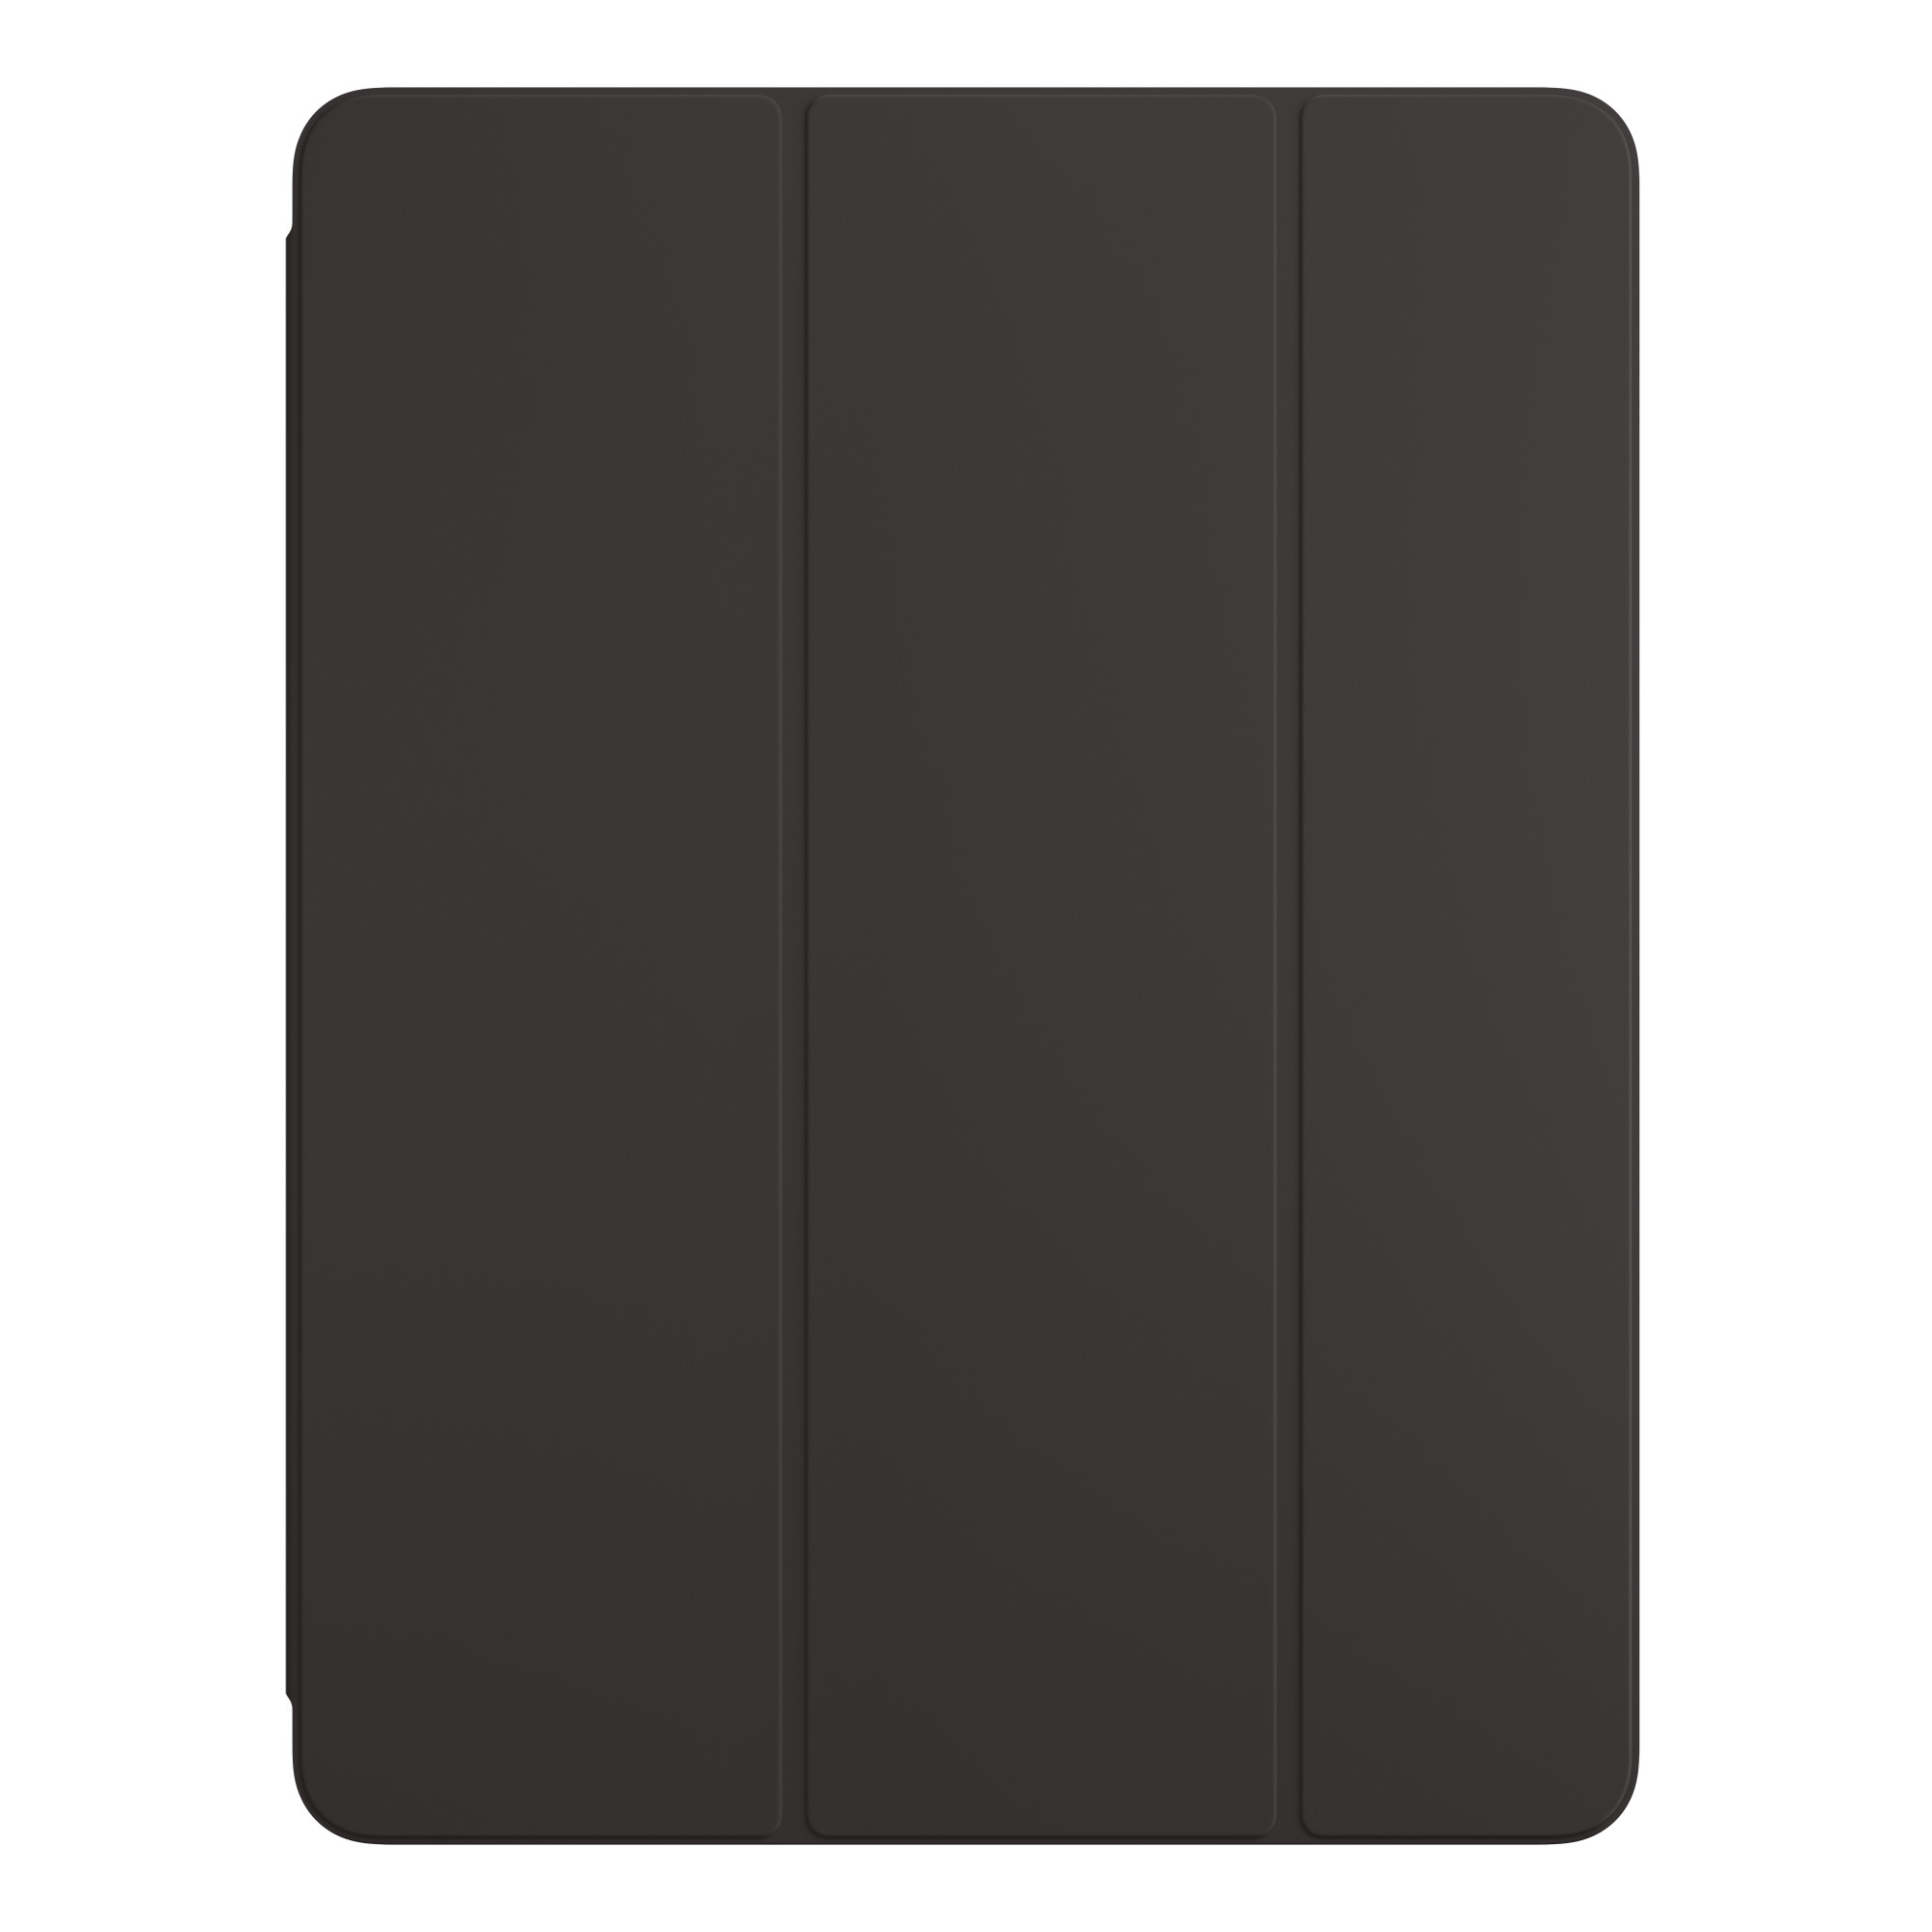 Folio for iPad